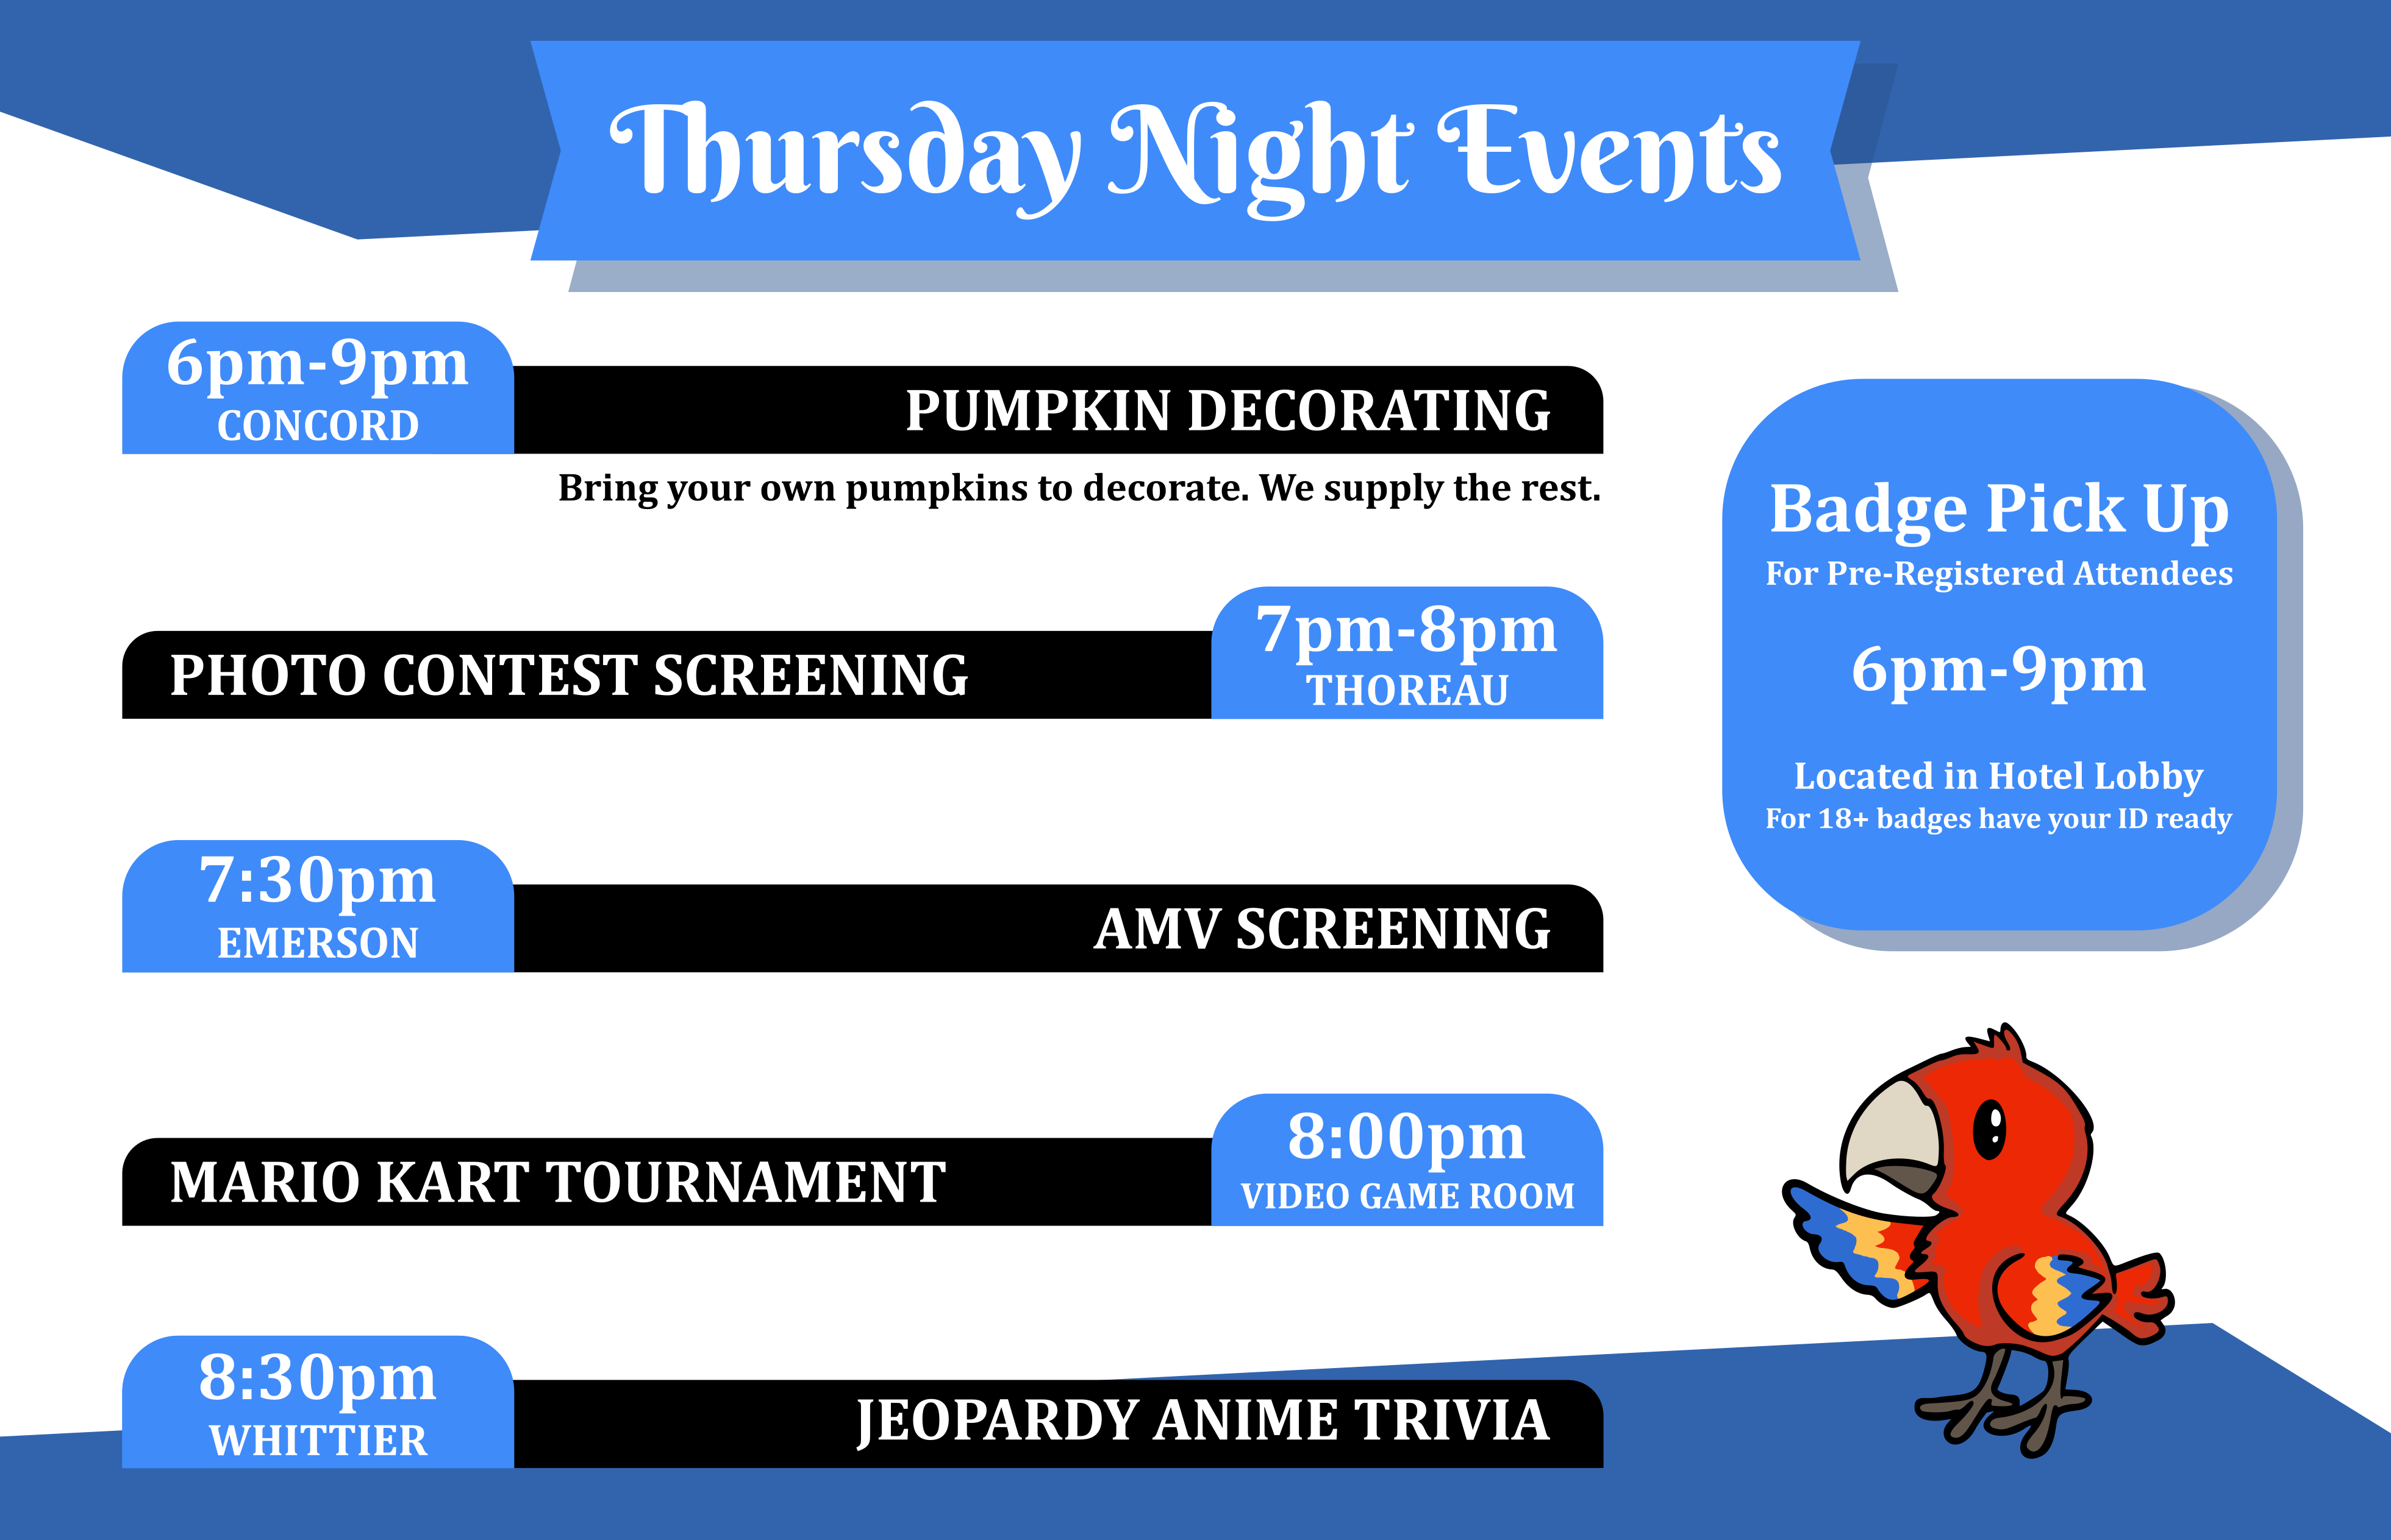 Thursday night events